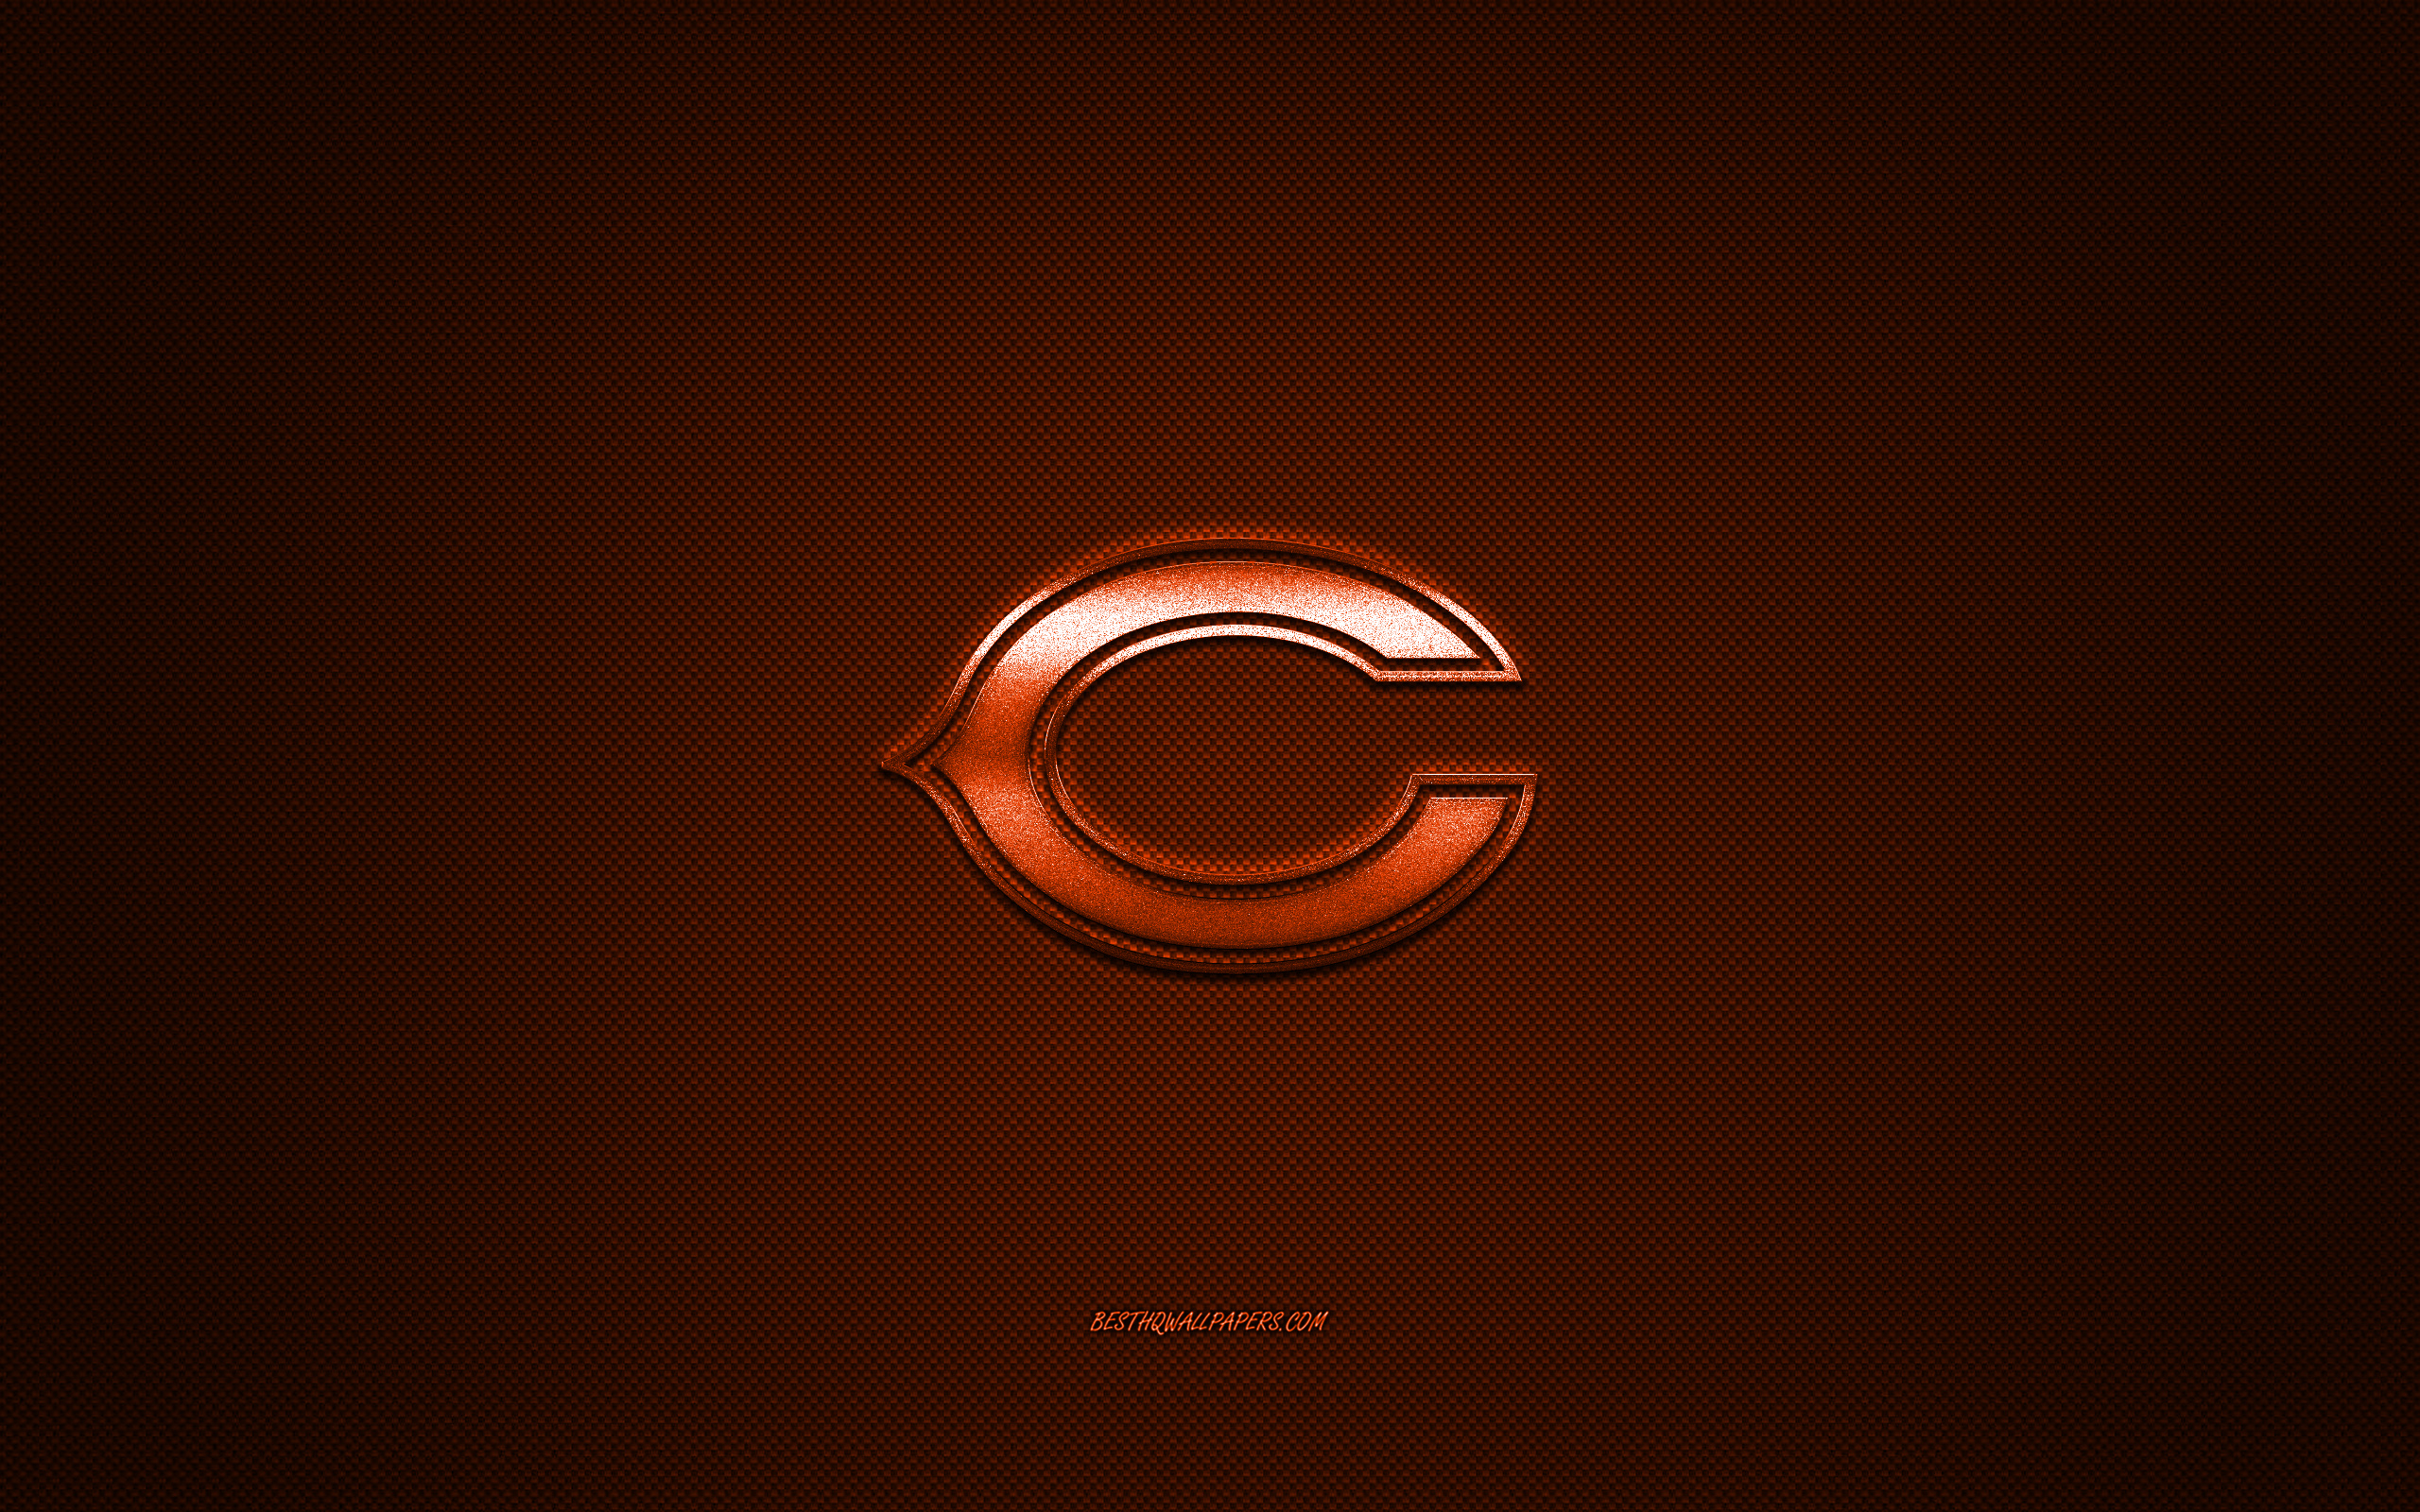 Wallpaper Chicago Bears American Football Club Nfl